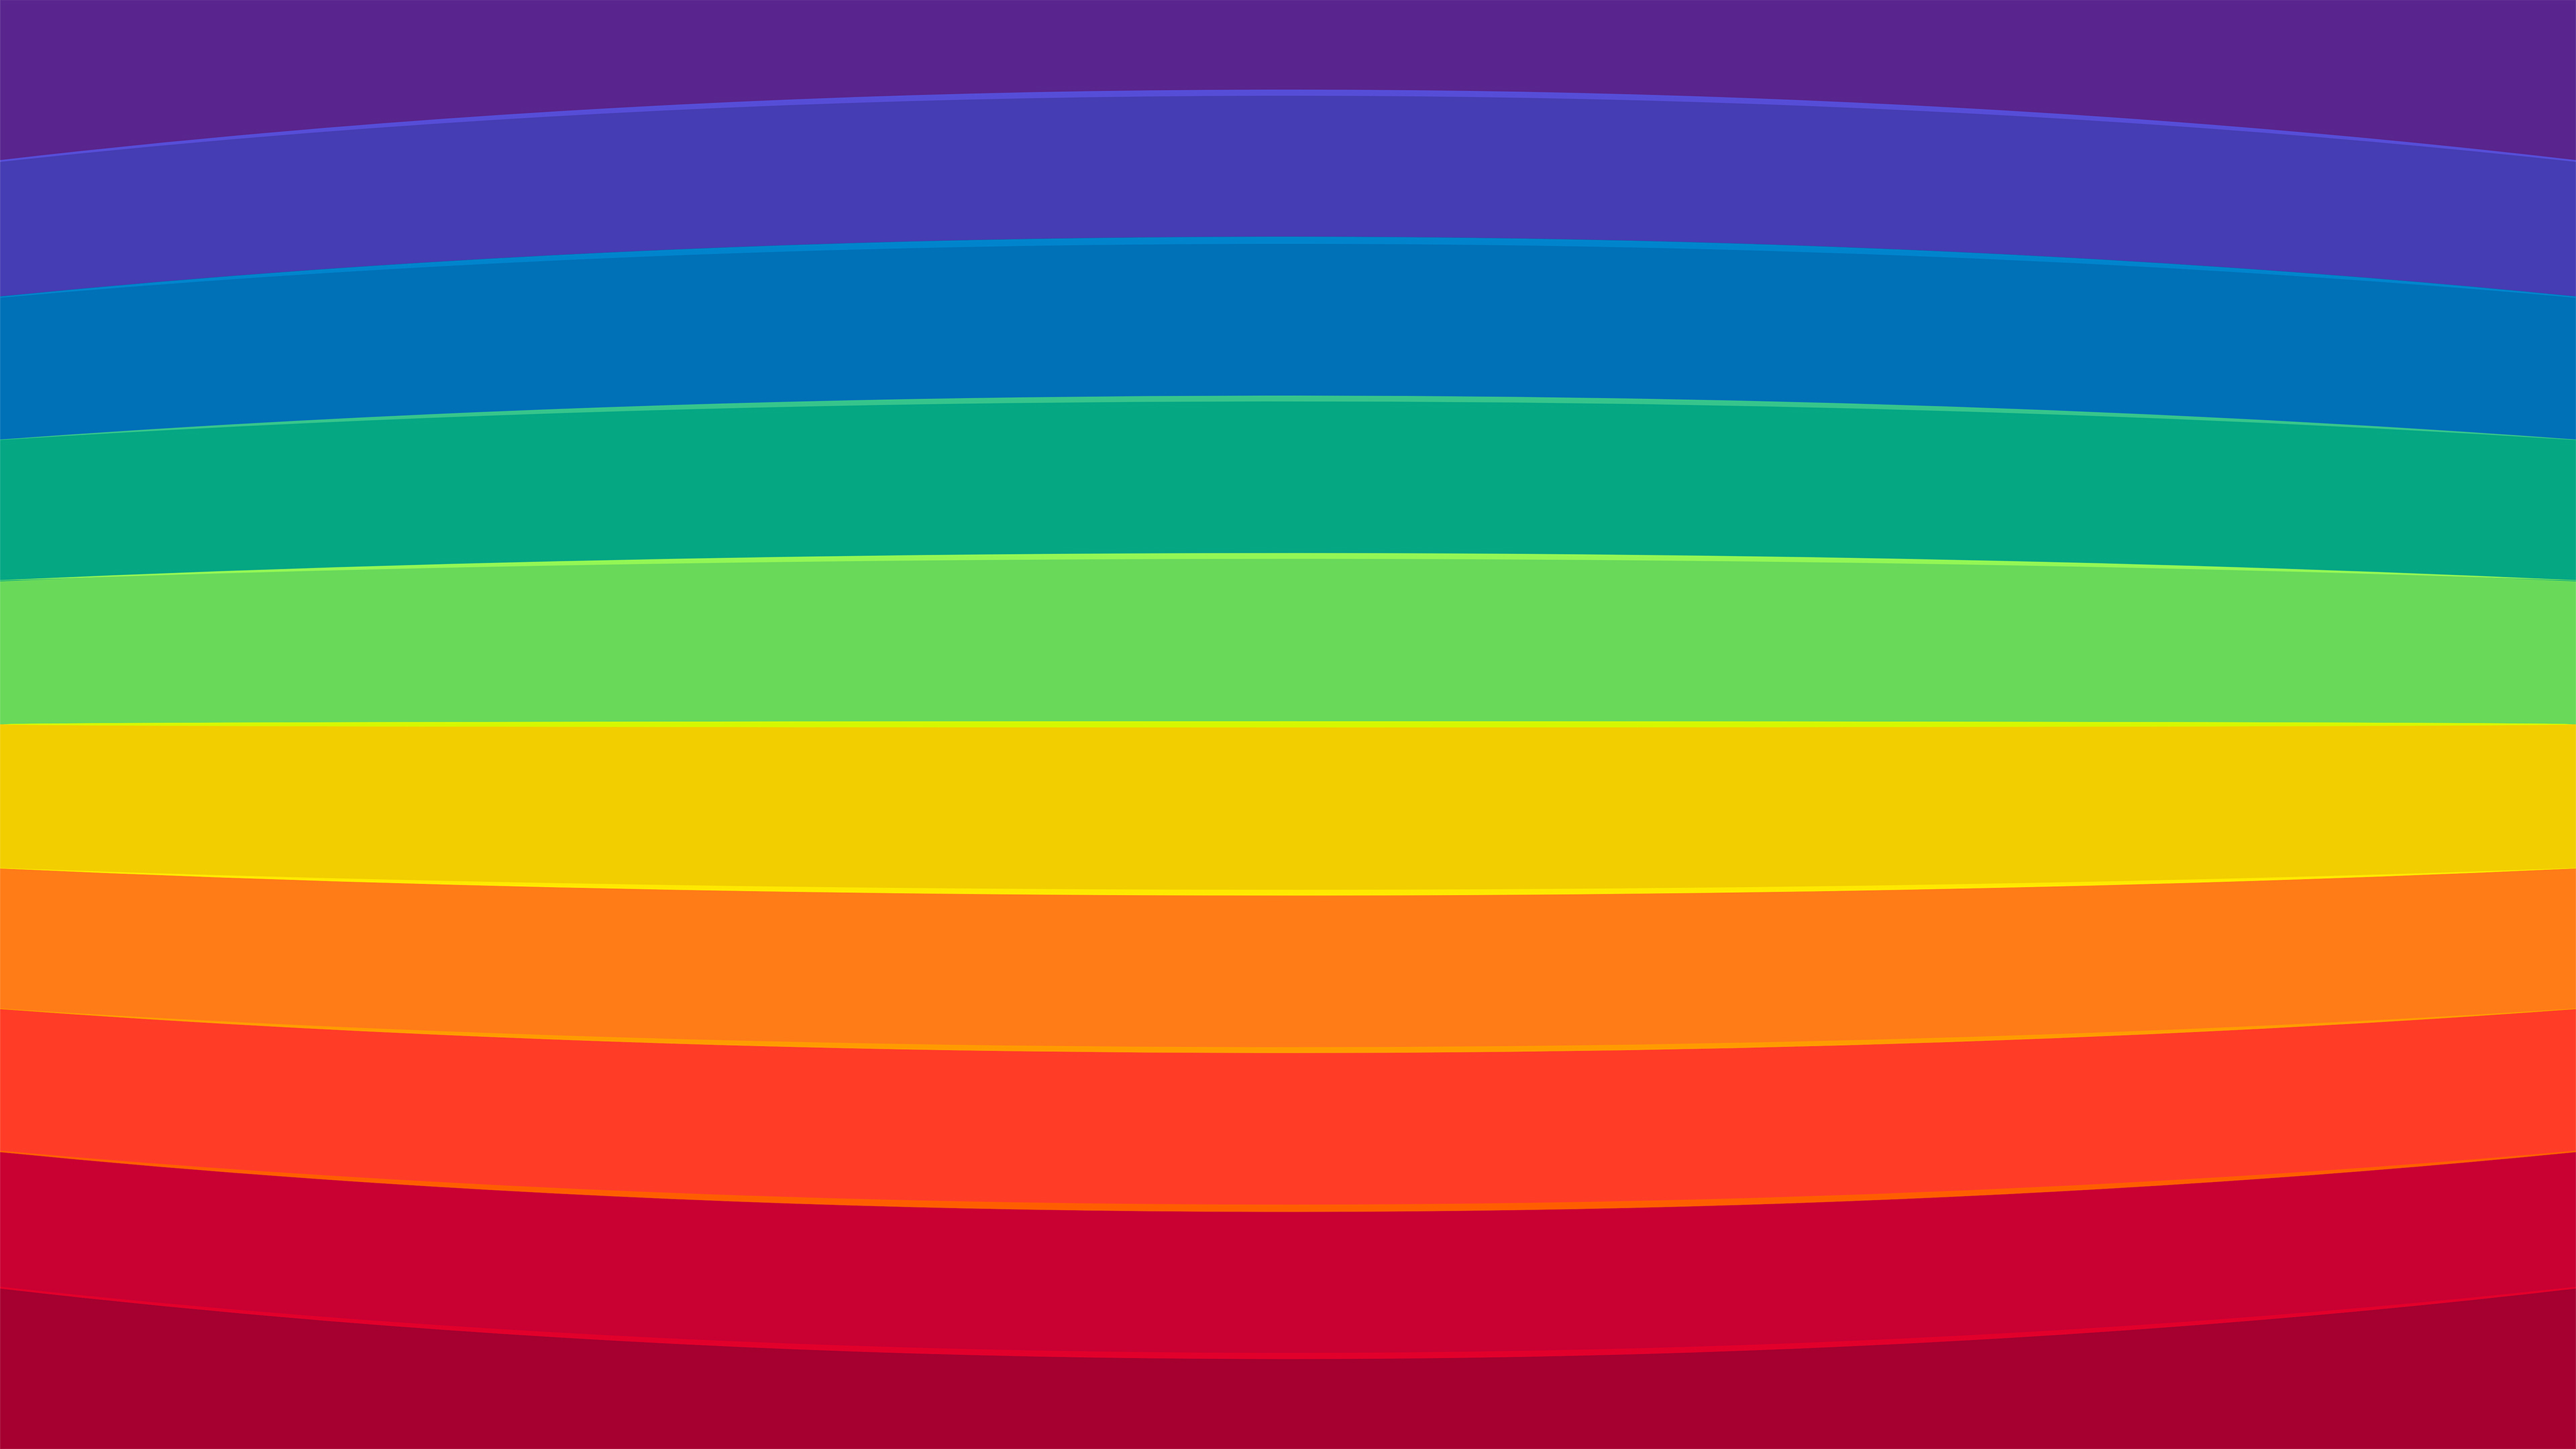 Download 3840x2160 rainbow colors, stripes, lines 4k wallpaper, uhd wallpaper, 16:9 widescreen wallpaper, 3840x2160 HD image, background, 24535